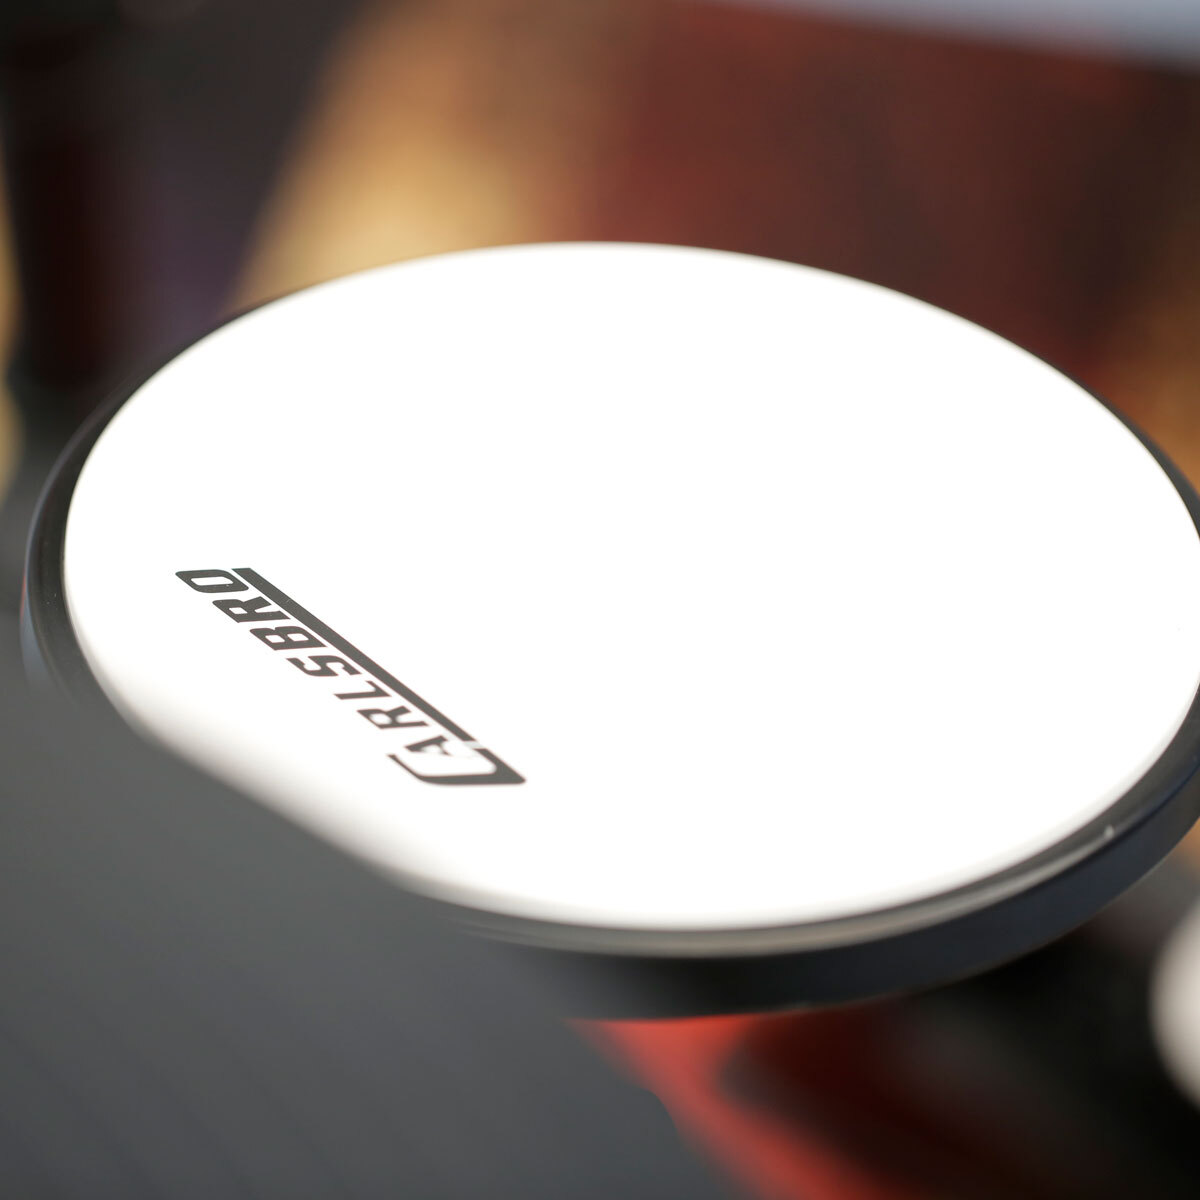 Close up image of drumpad